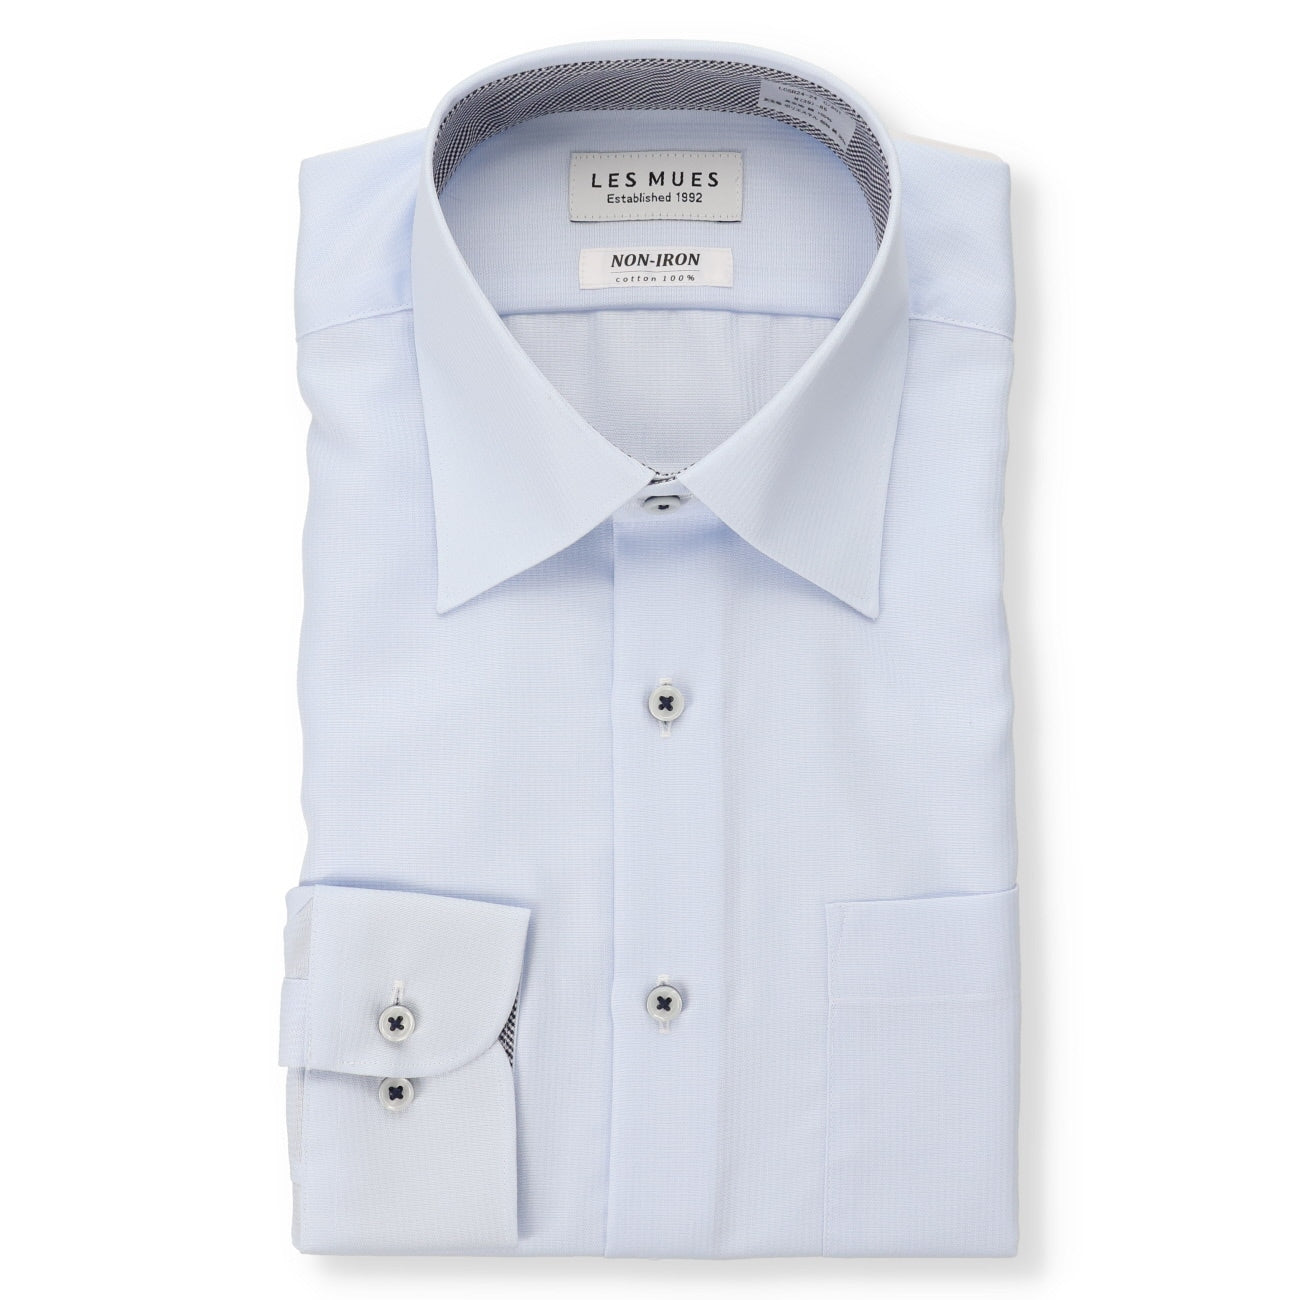 LES MUES Non-iron Cotton Blue Regular Collar Shirt - Regular fit